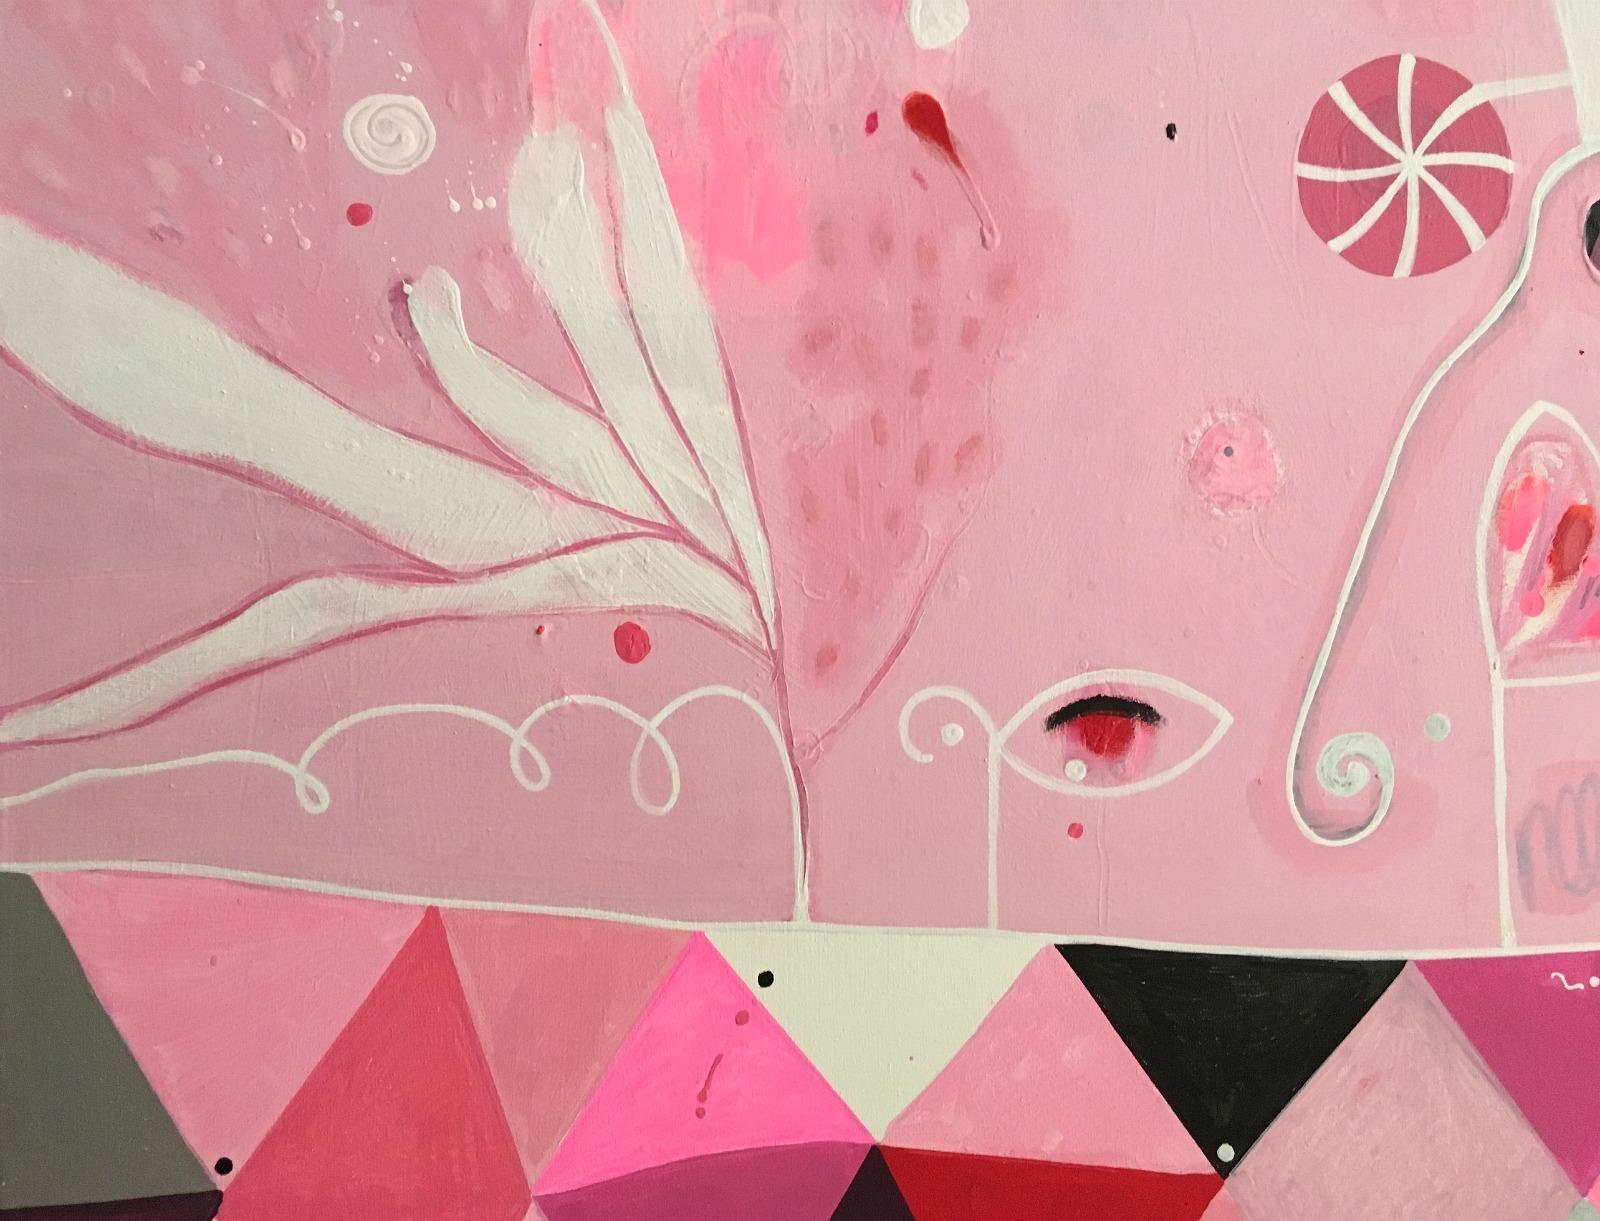 Balloon Parade Pink Abstract - Abstract Expressionist Painting by Malgosia Kiernozycka